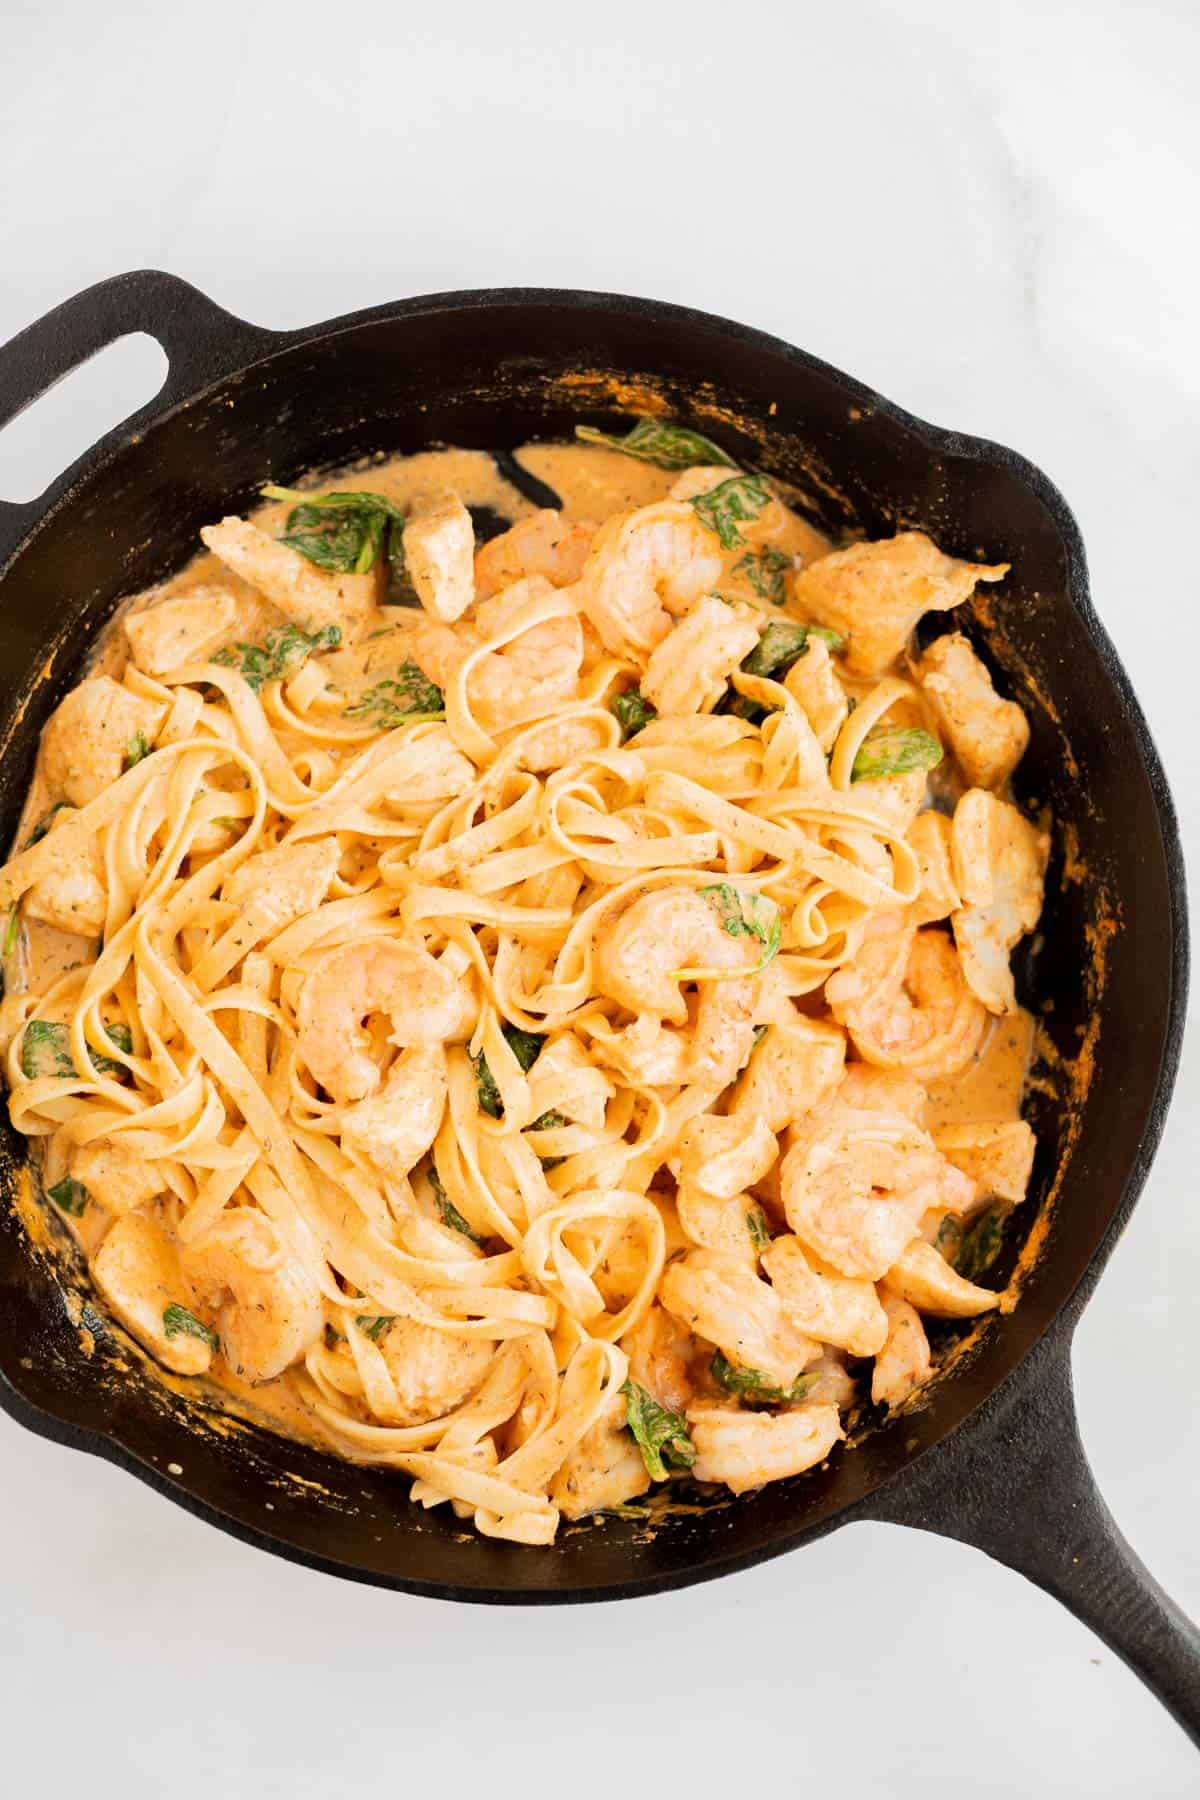 Cajun shrimp and chicken pasta in a cast iron skillet.